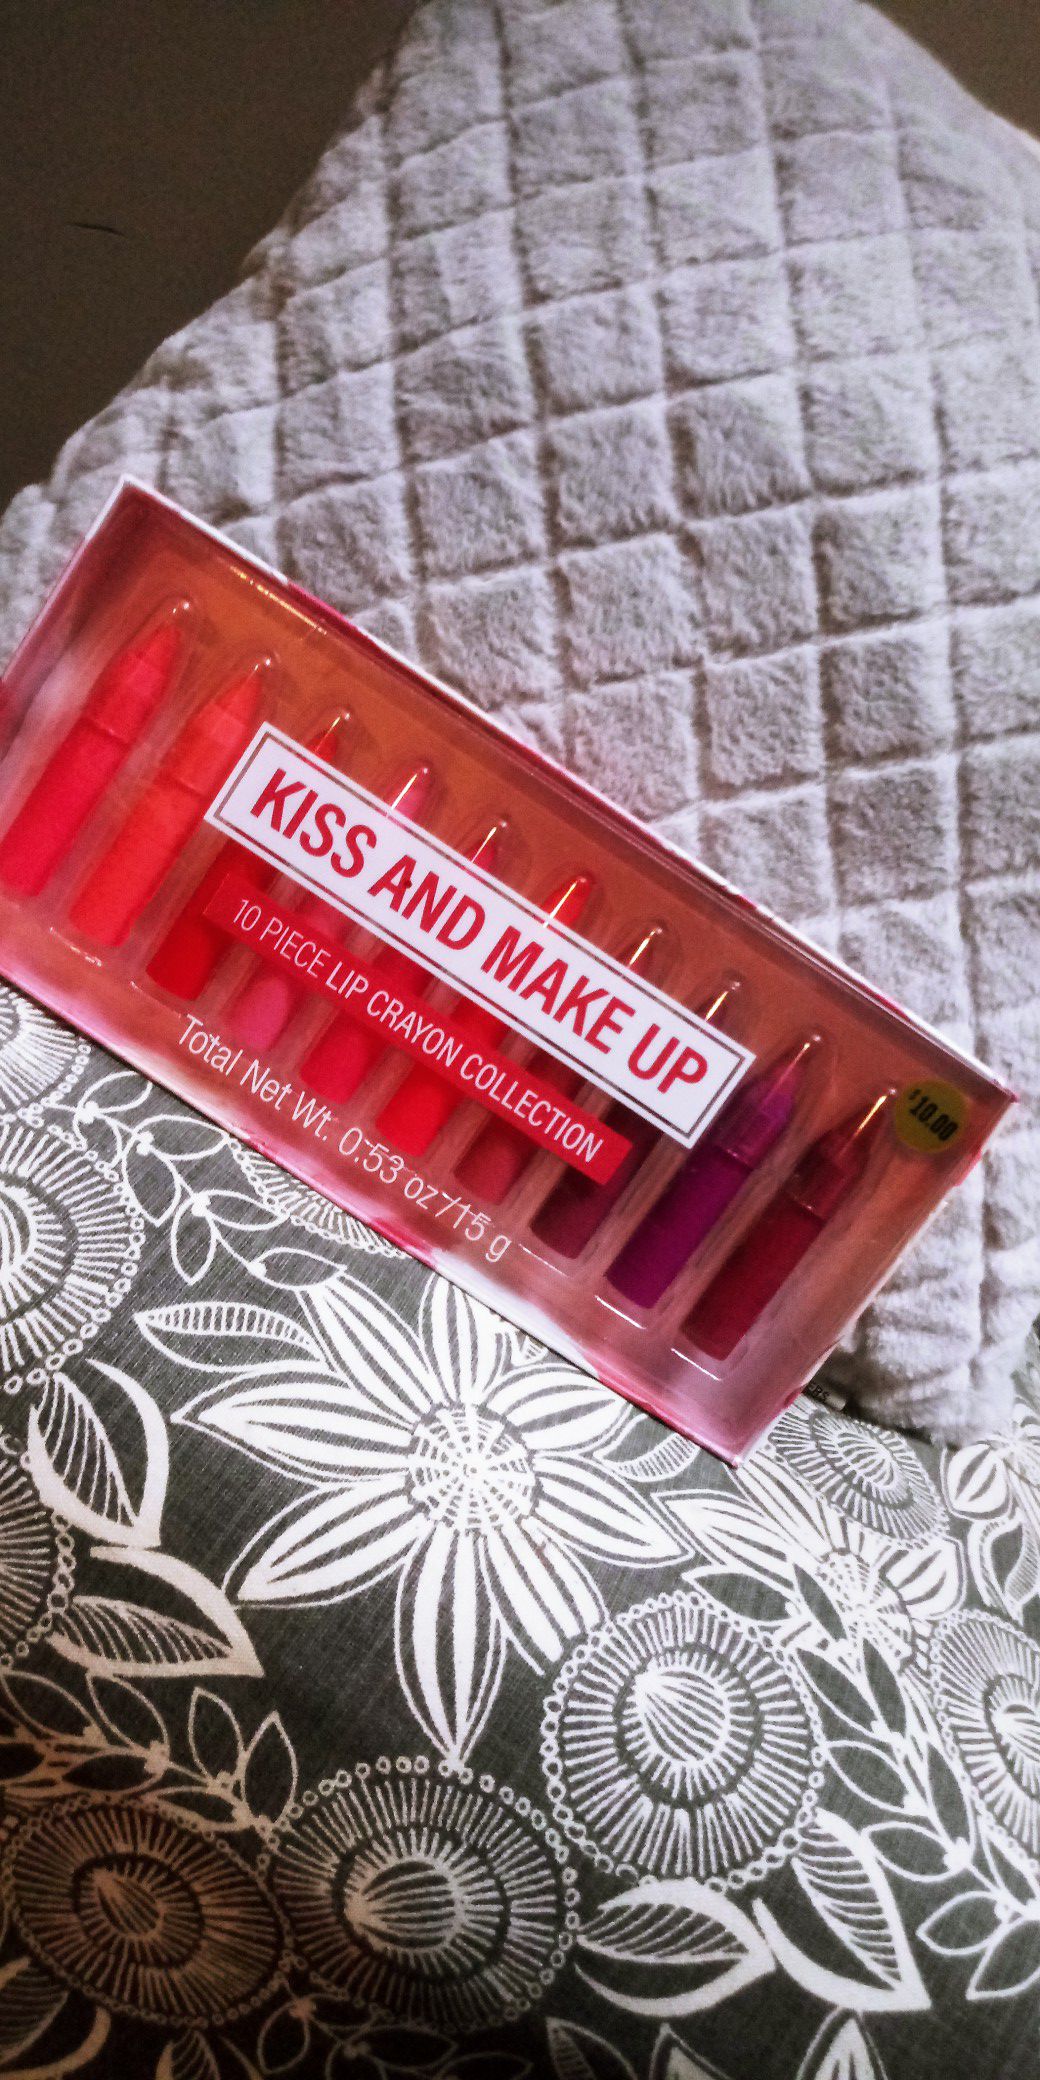 Kiss and make up lipstick set